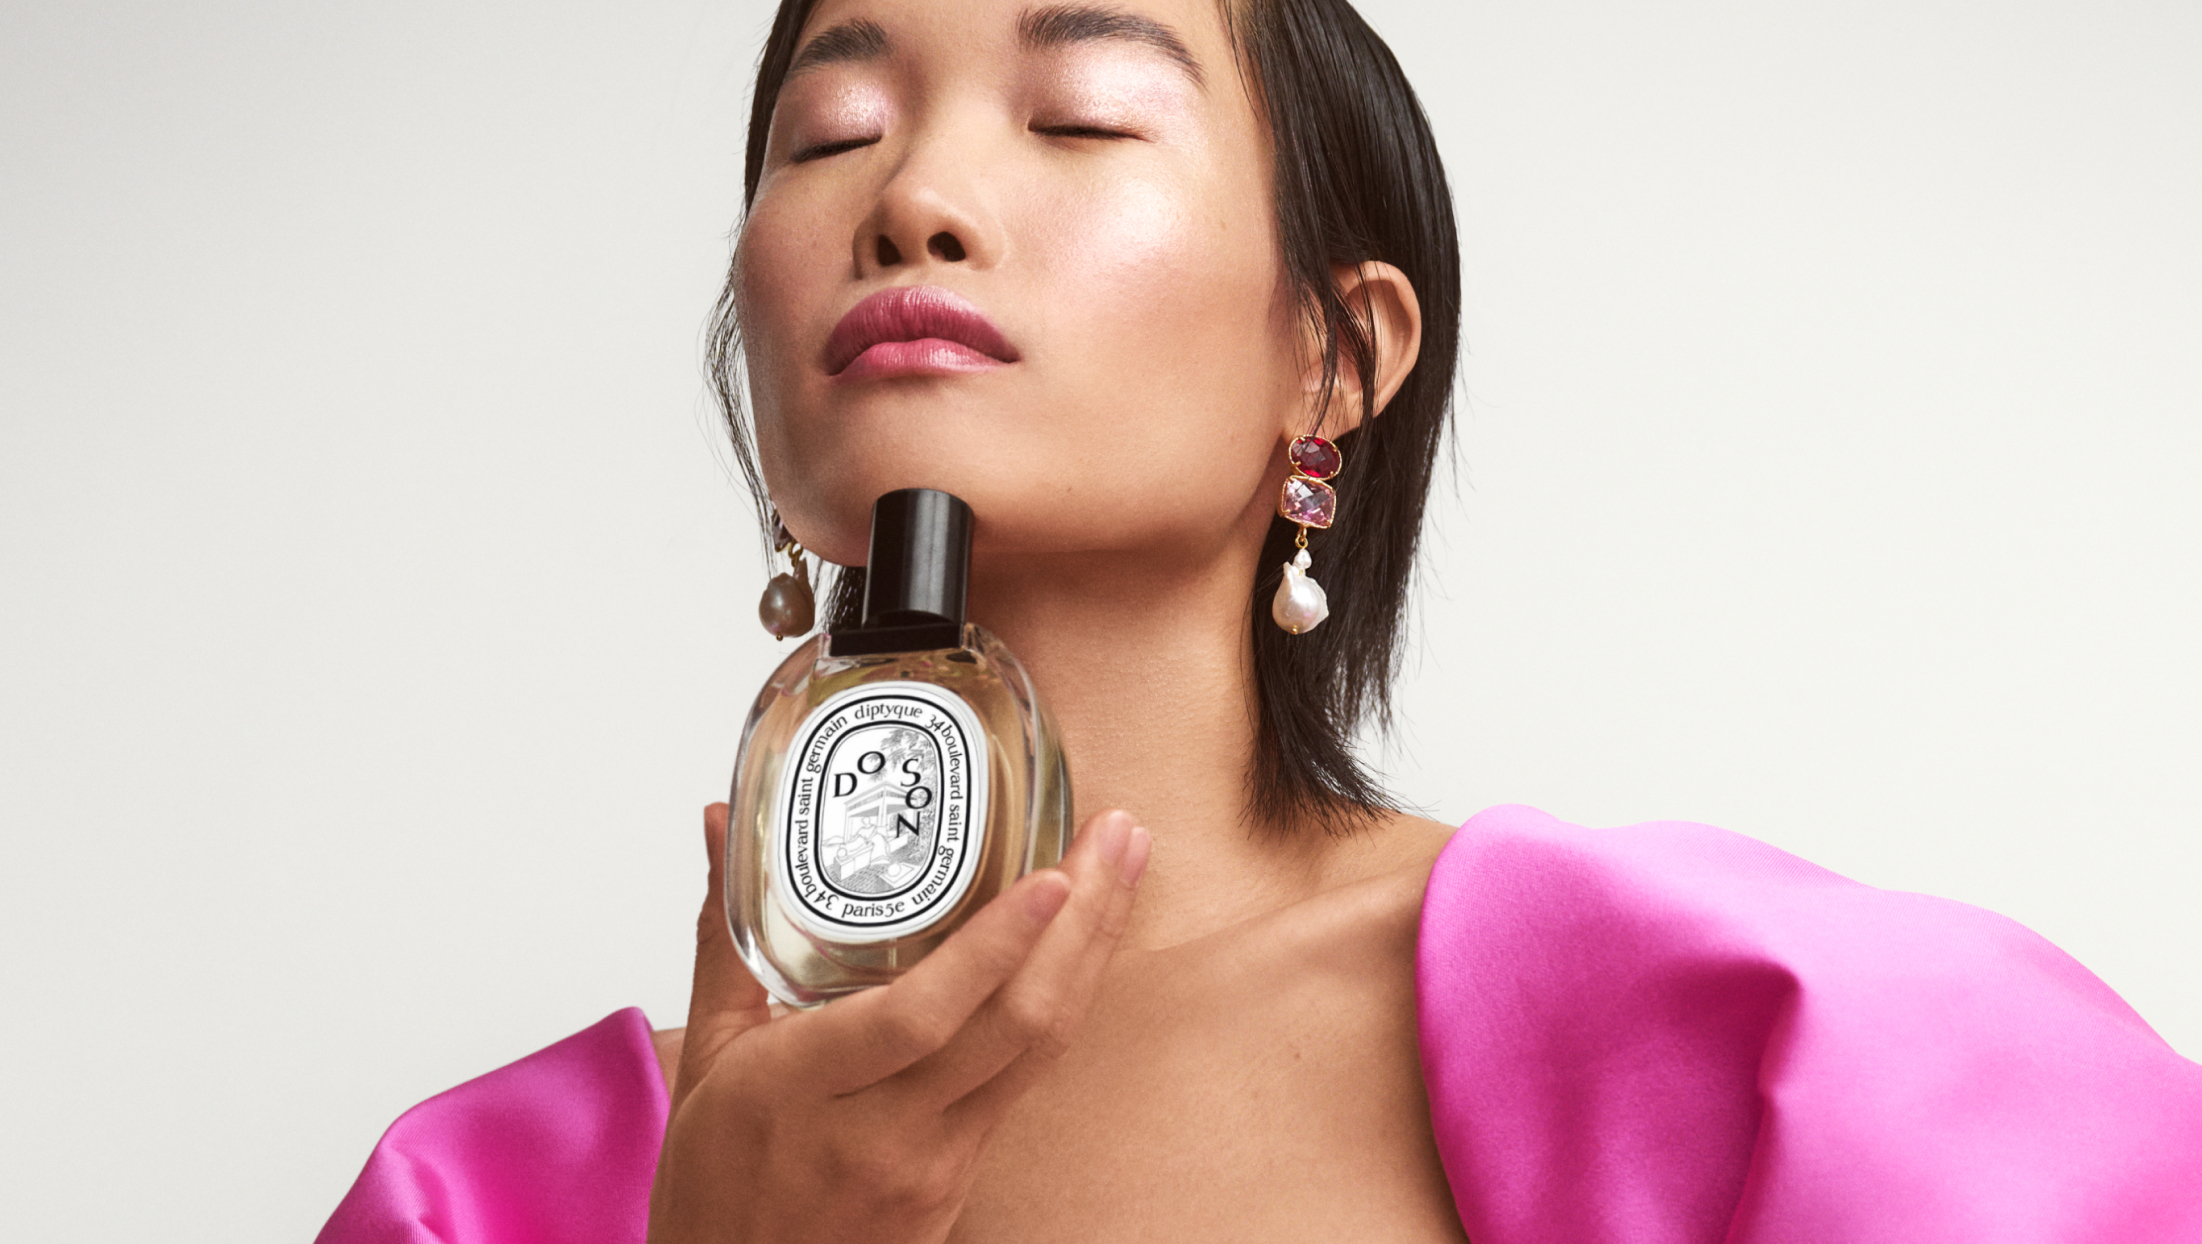 Louis Vuitton On The Beach 100ml Eau De Parfum, Beauty & Personal Care,  Fragrance & Deodorants on Carousell